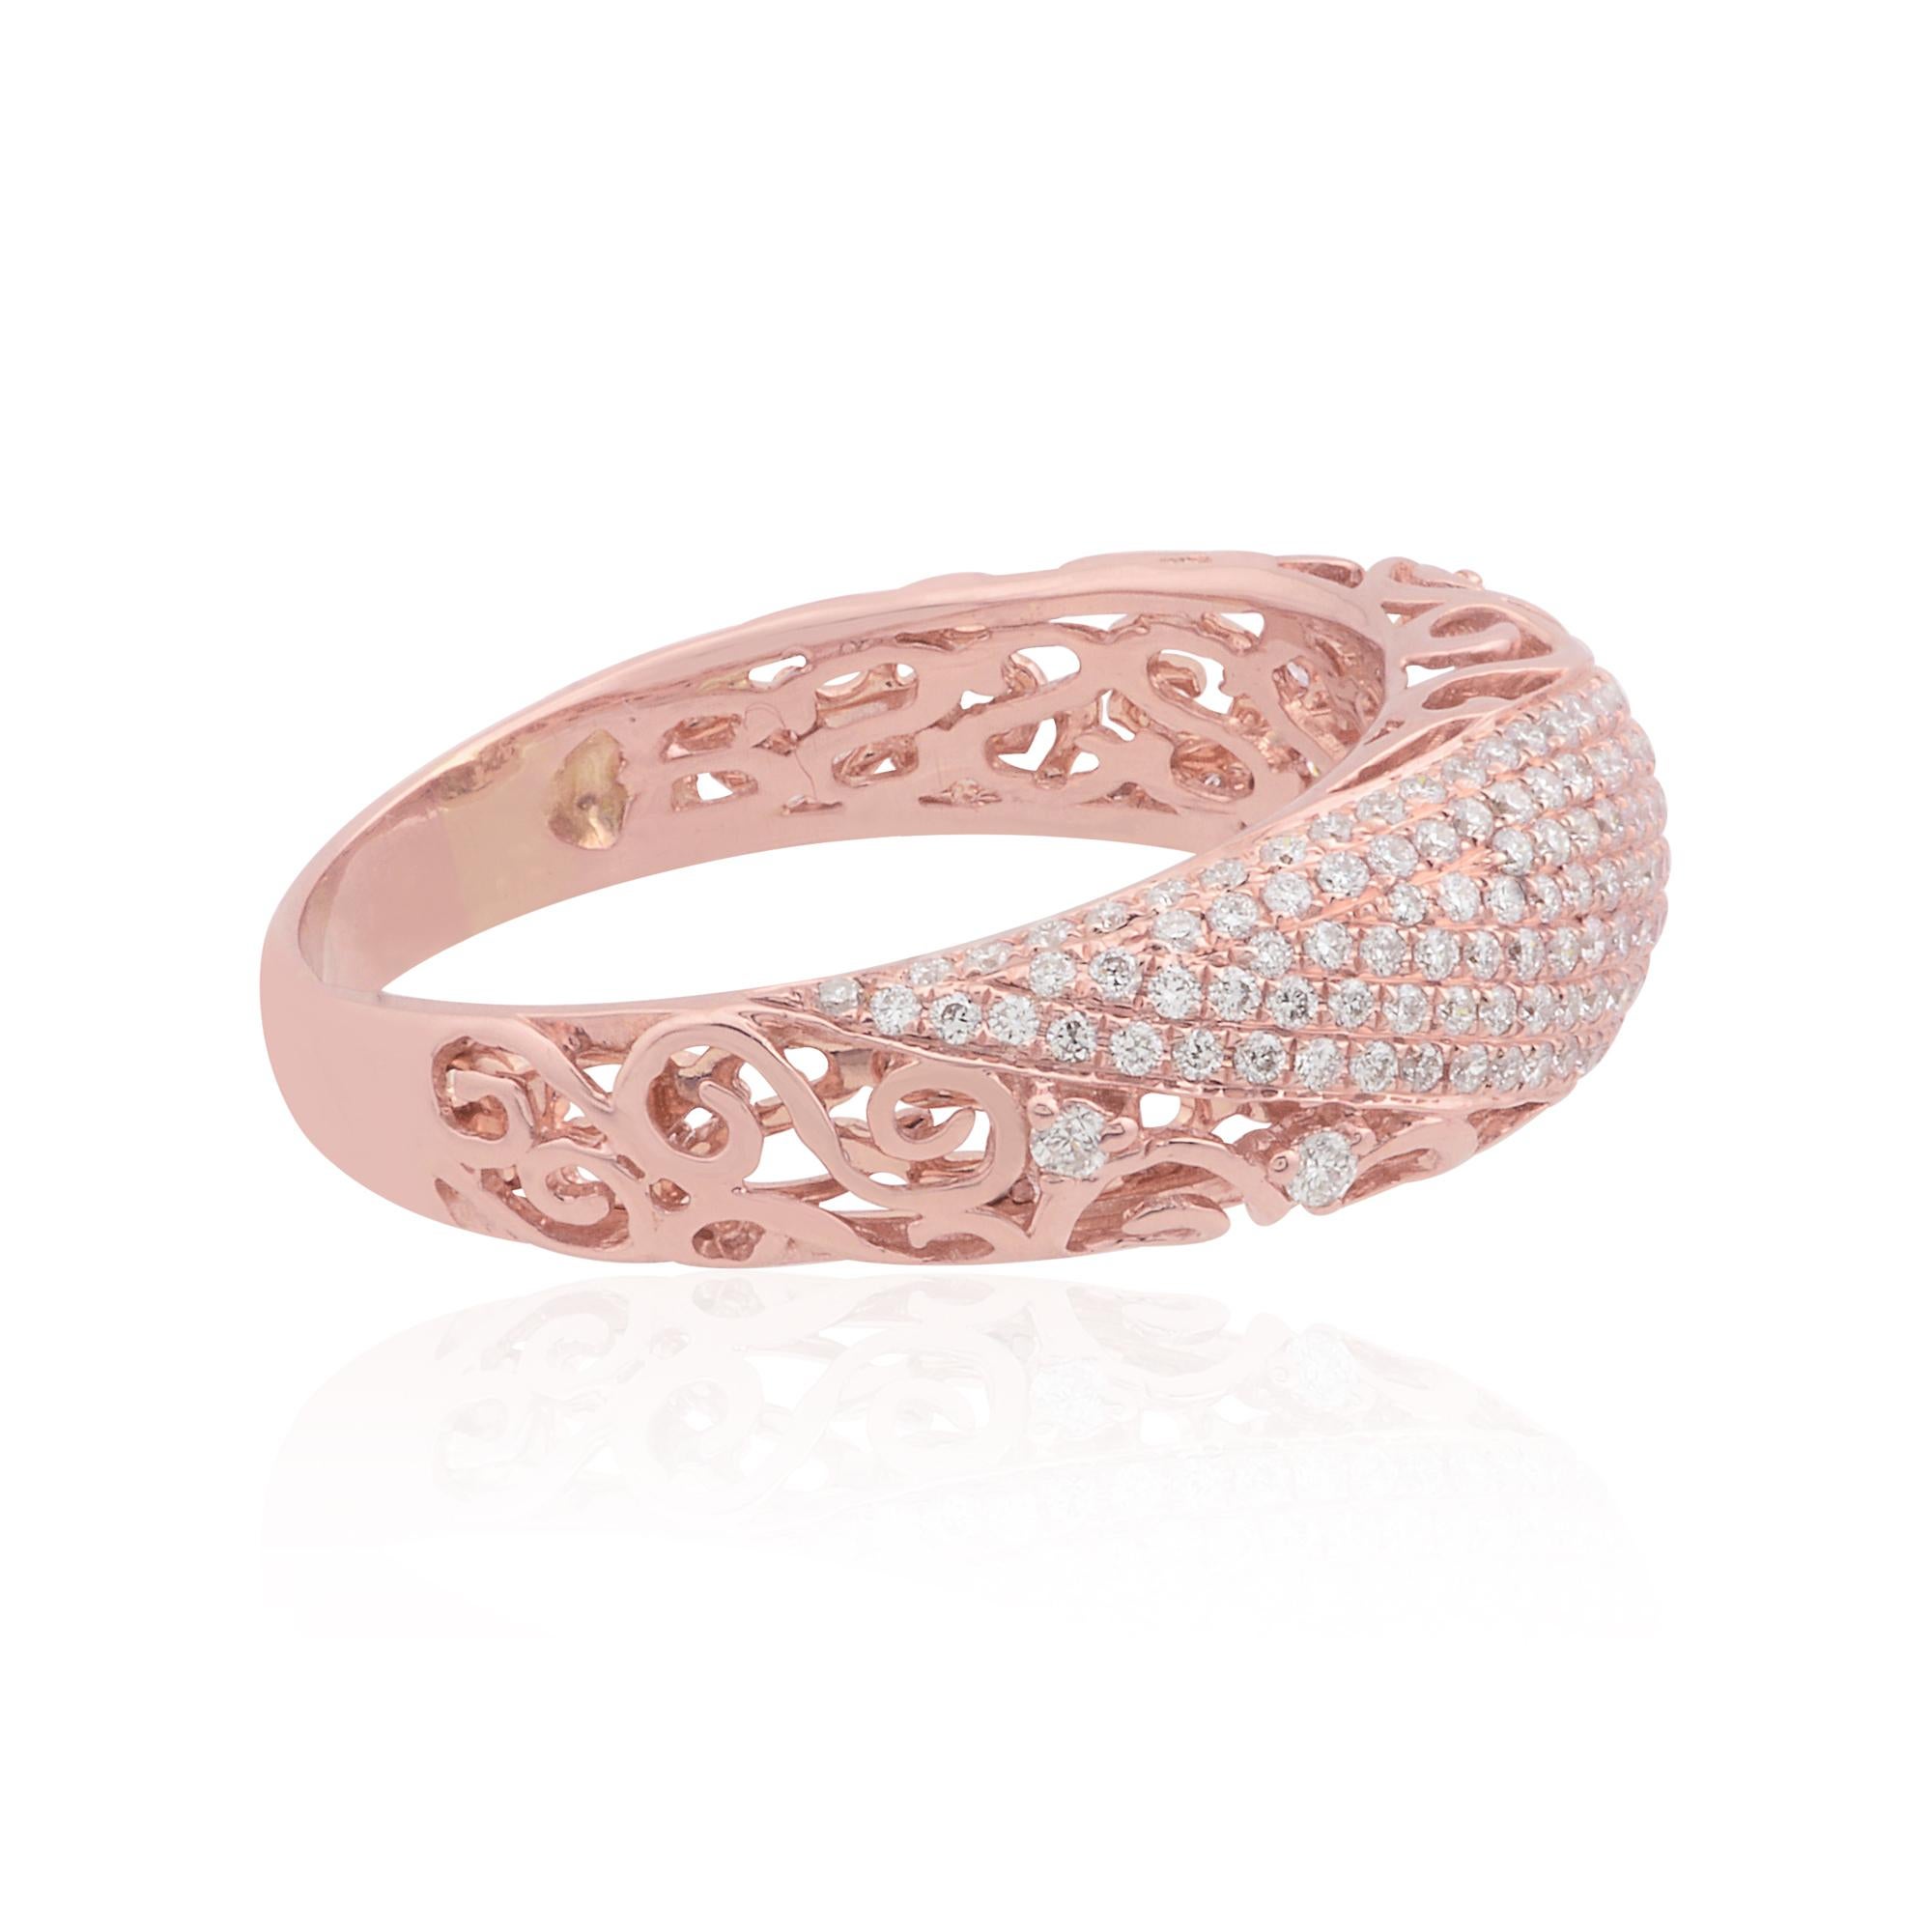 For Sale:  0.70 Carat Diamond Pave Filigree Design Ring Solid 18k Rose Gold Fine Jewelry 4